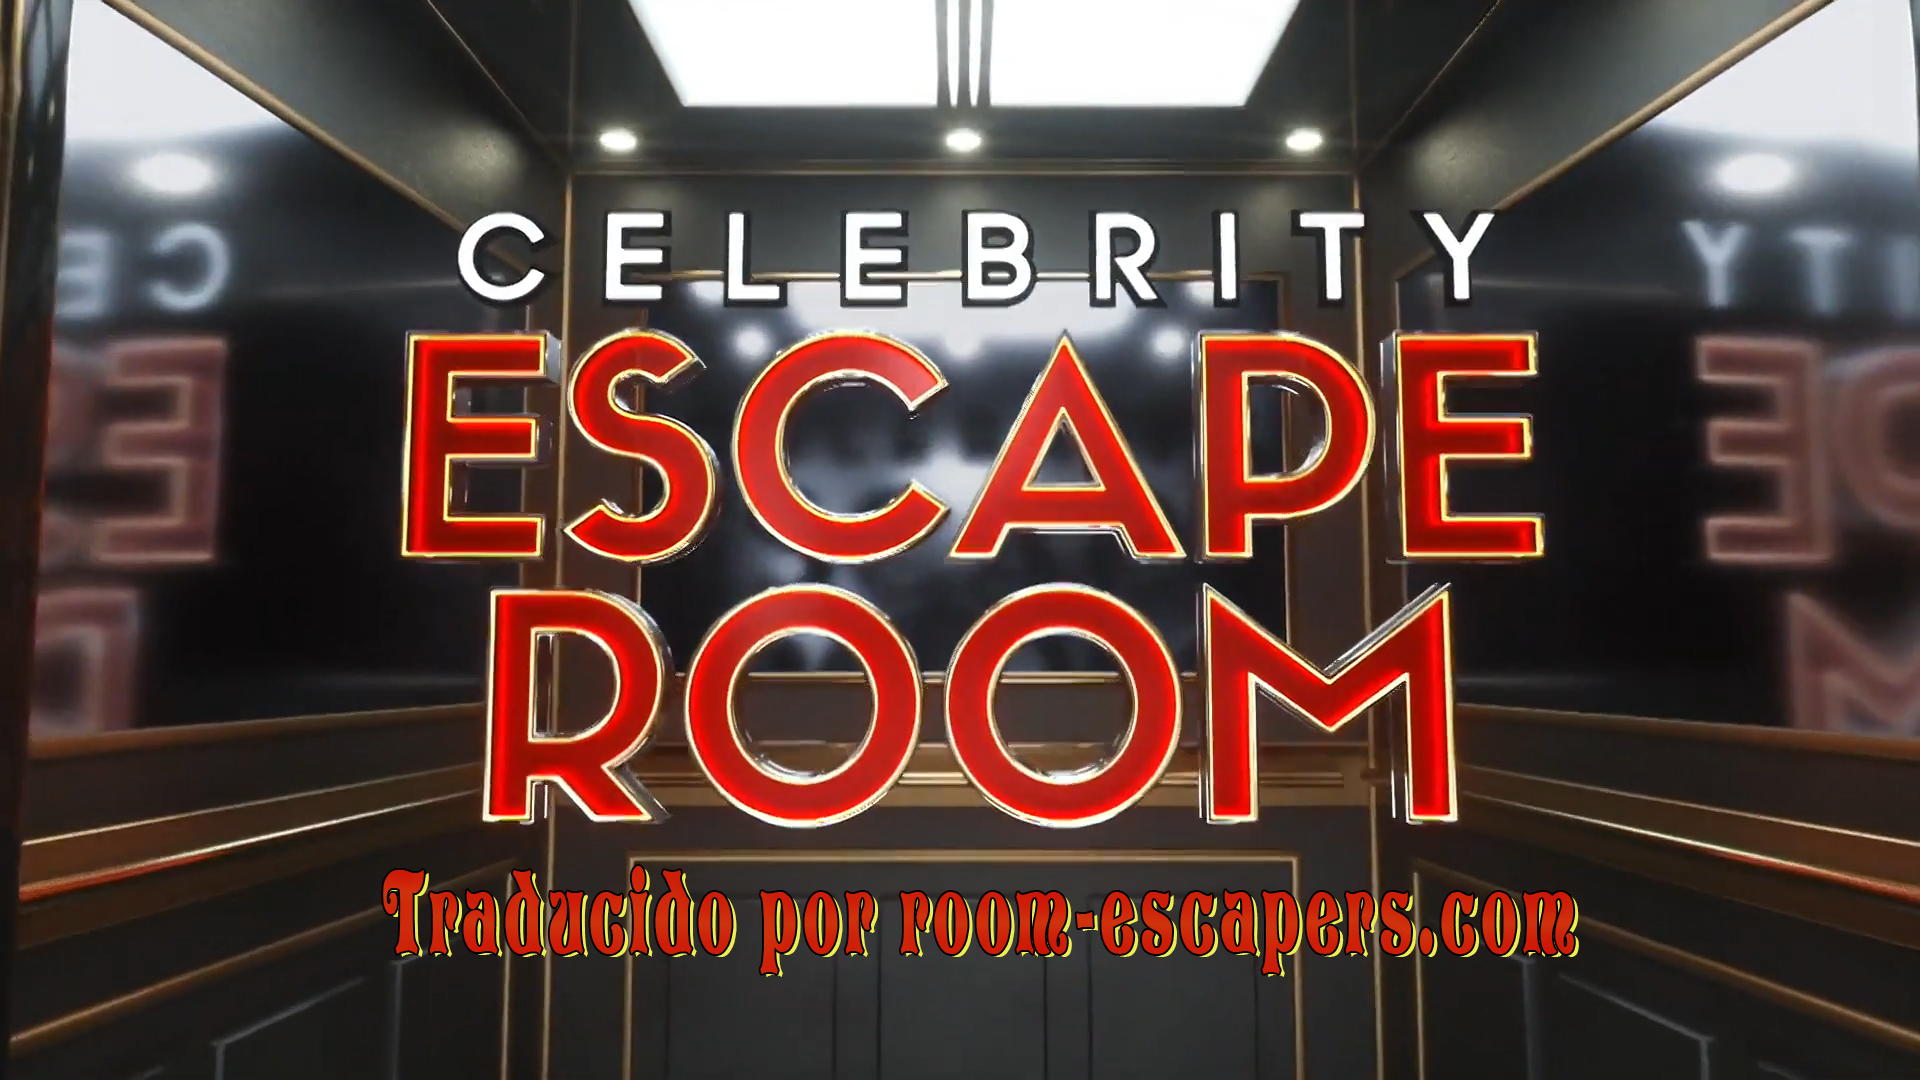 Celebrity Escape Room